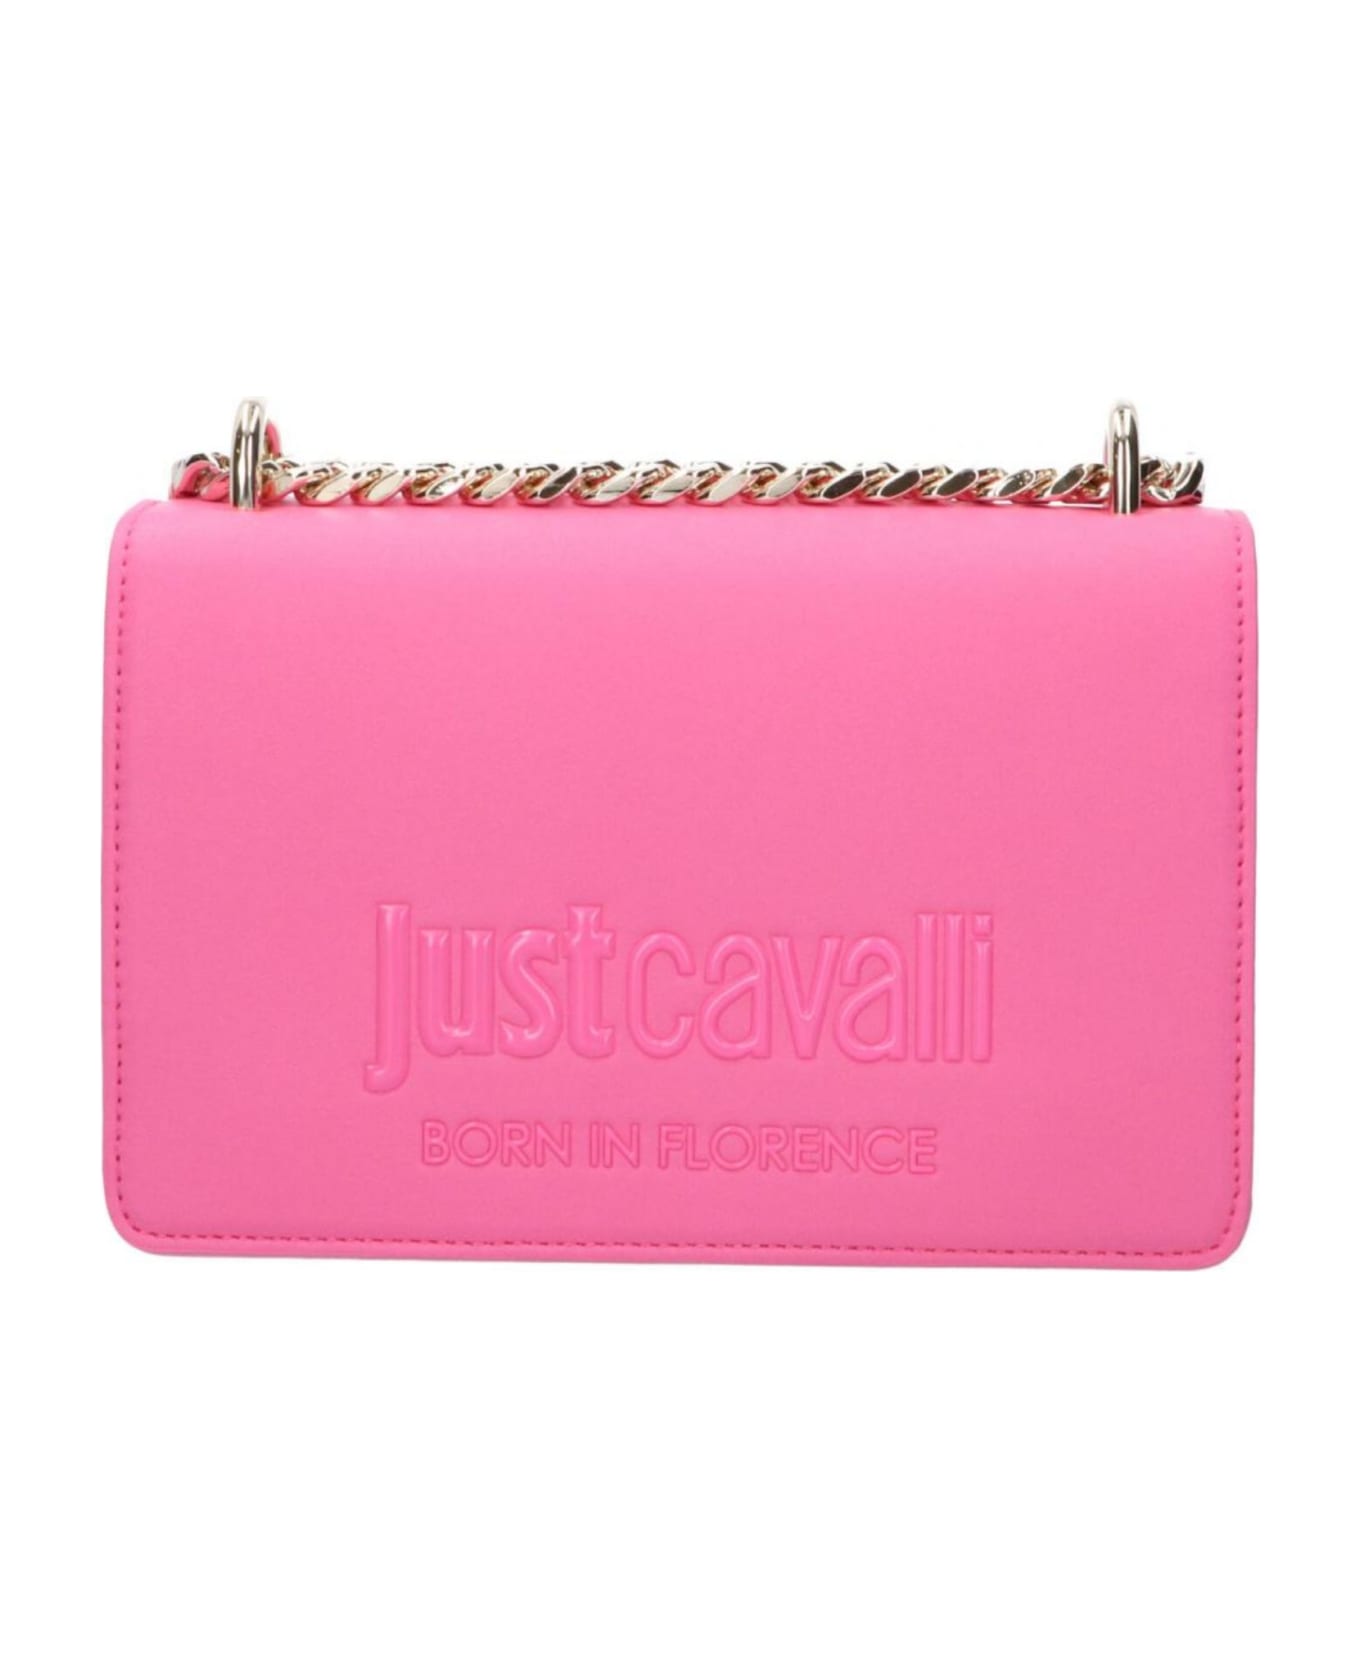 Just Cavalli Bag - Pink ショルダーバッグ